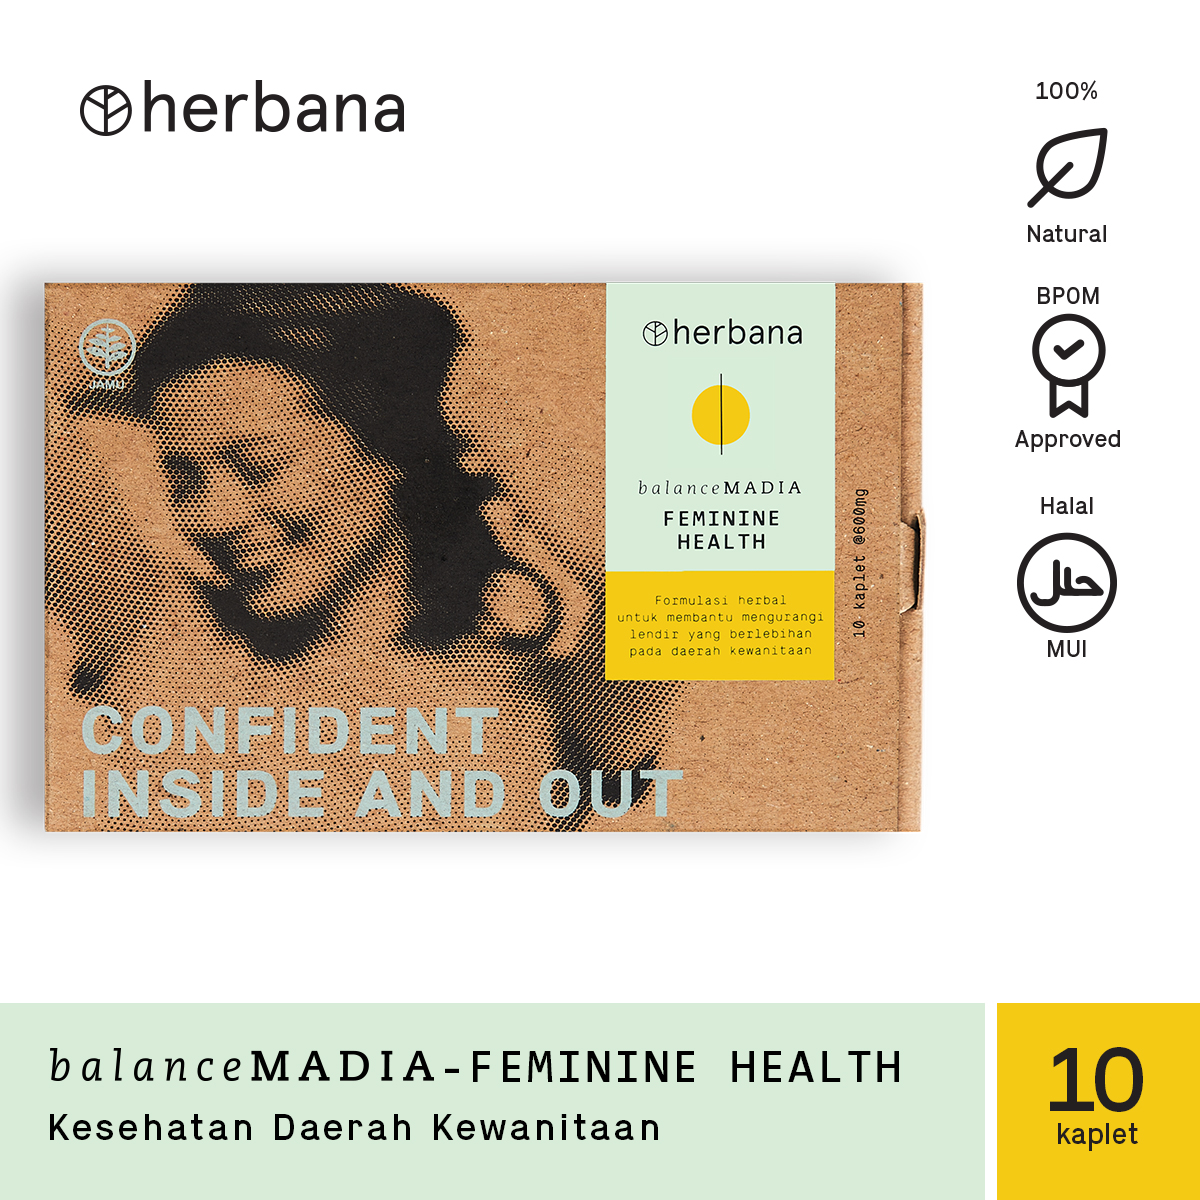 herbana-balance-madia-feminie-health-10-caplets-77-1615972895.jpg